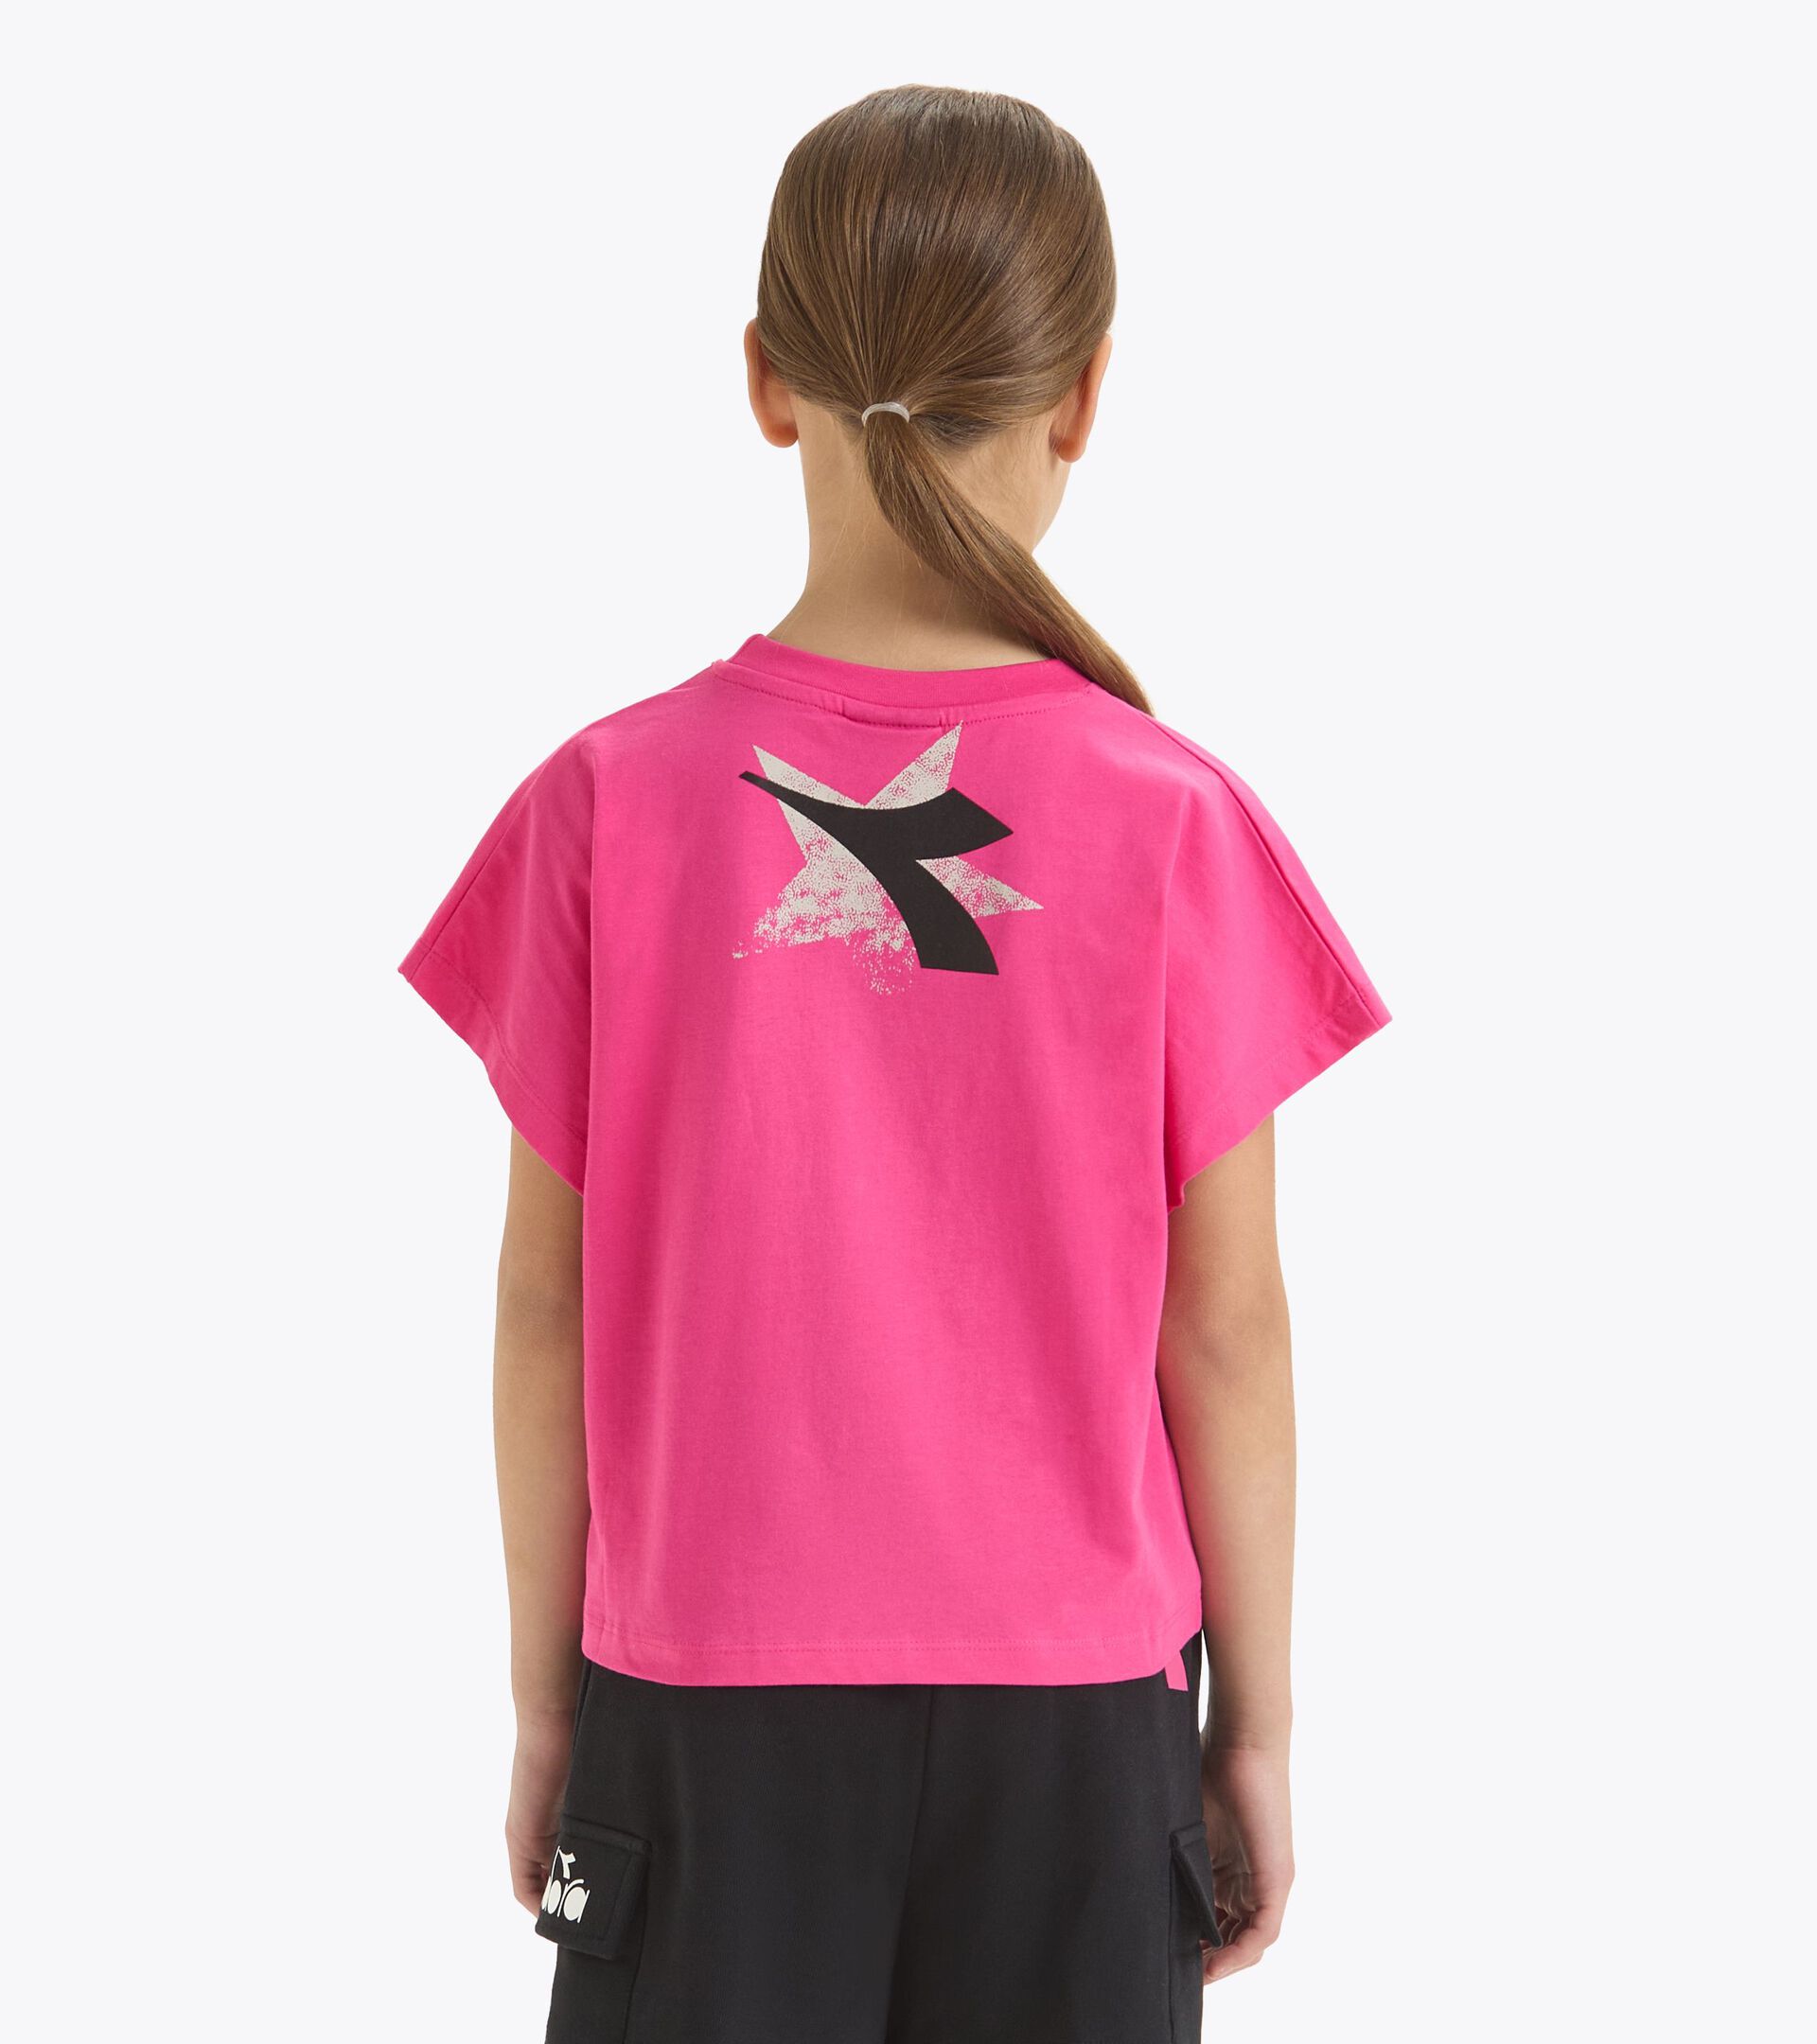 T-shirt taglio crop - Boxy fit - Bambina JG. T-SHIRT STARS ROSA BUGANVILLEA - Diadora